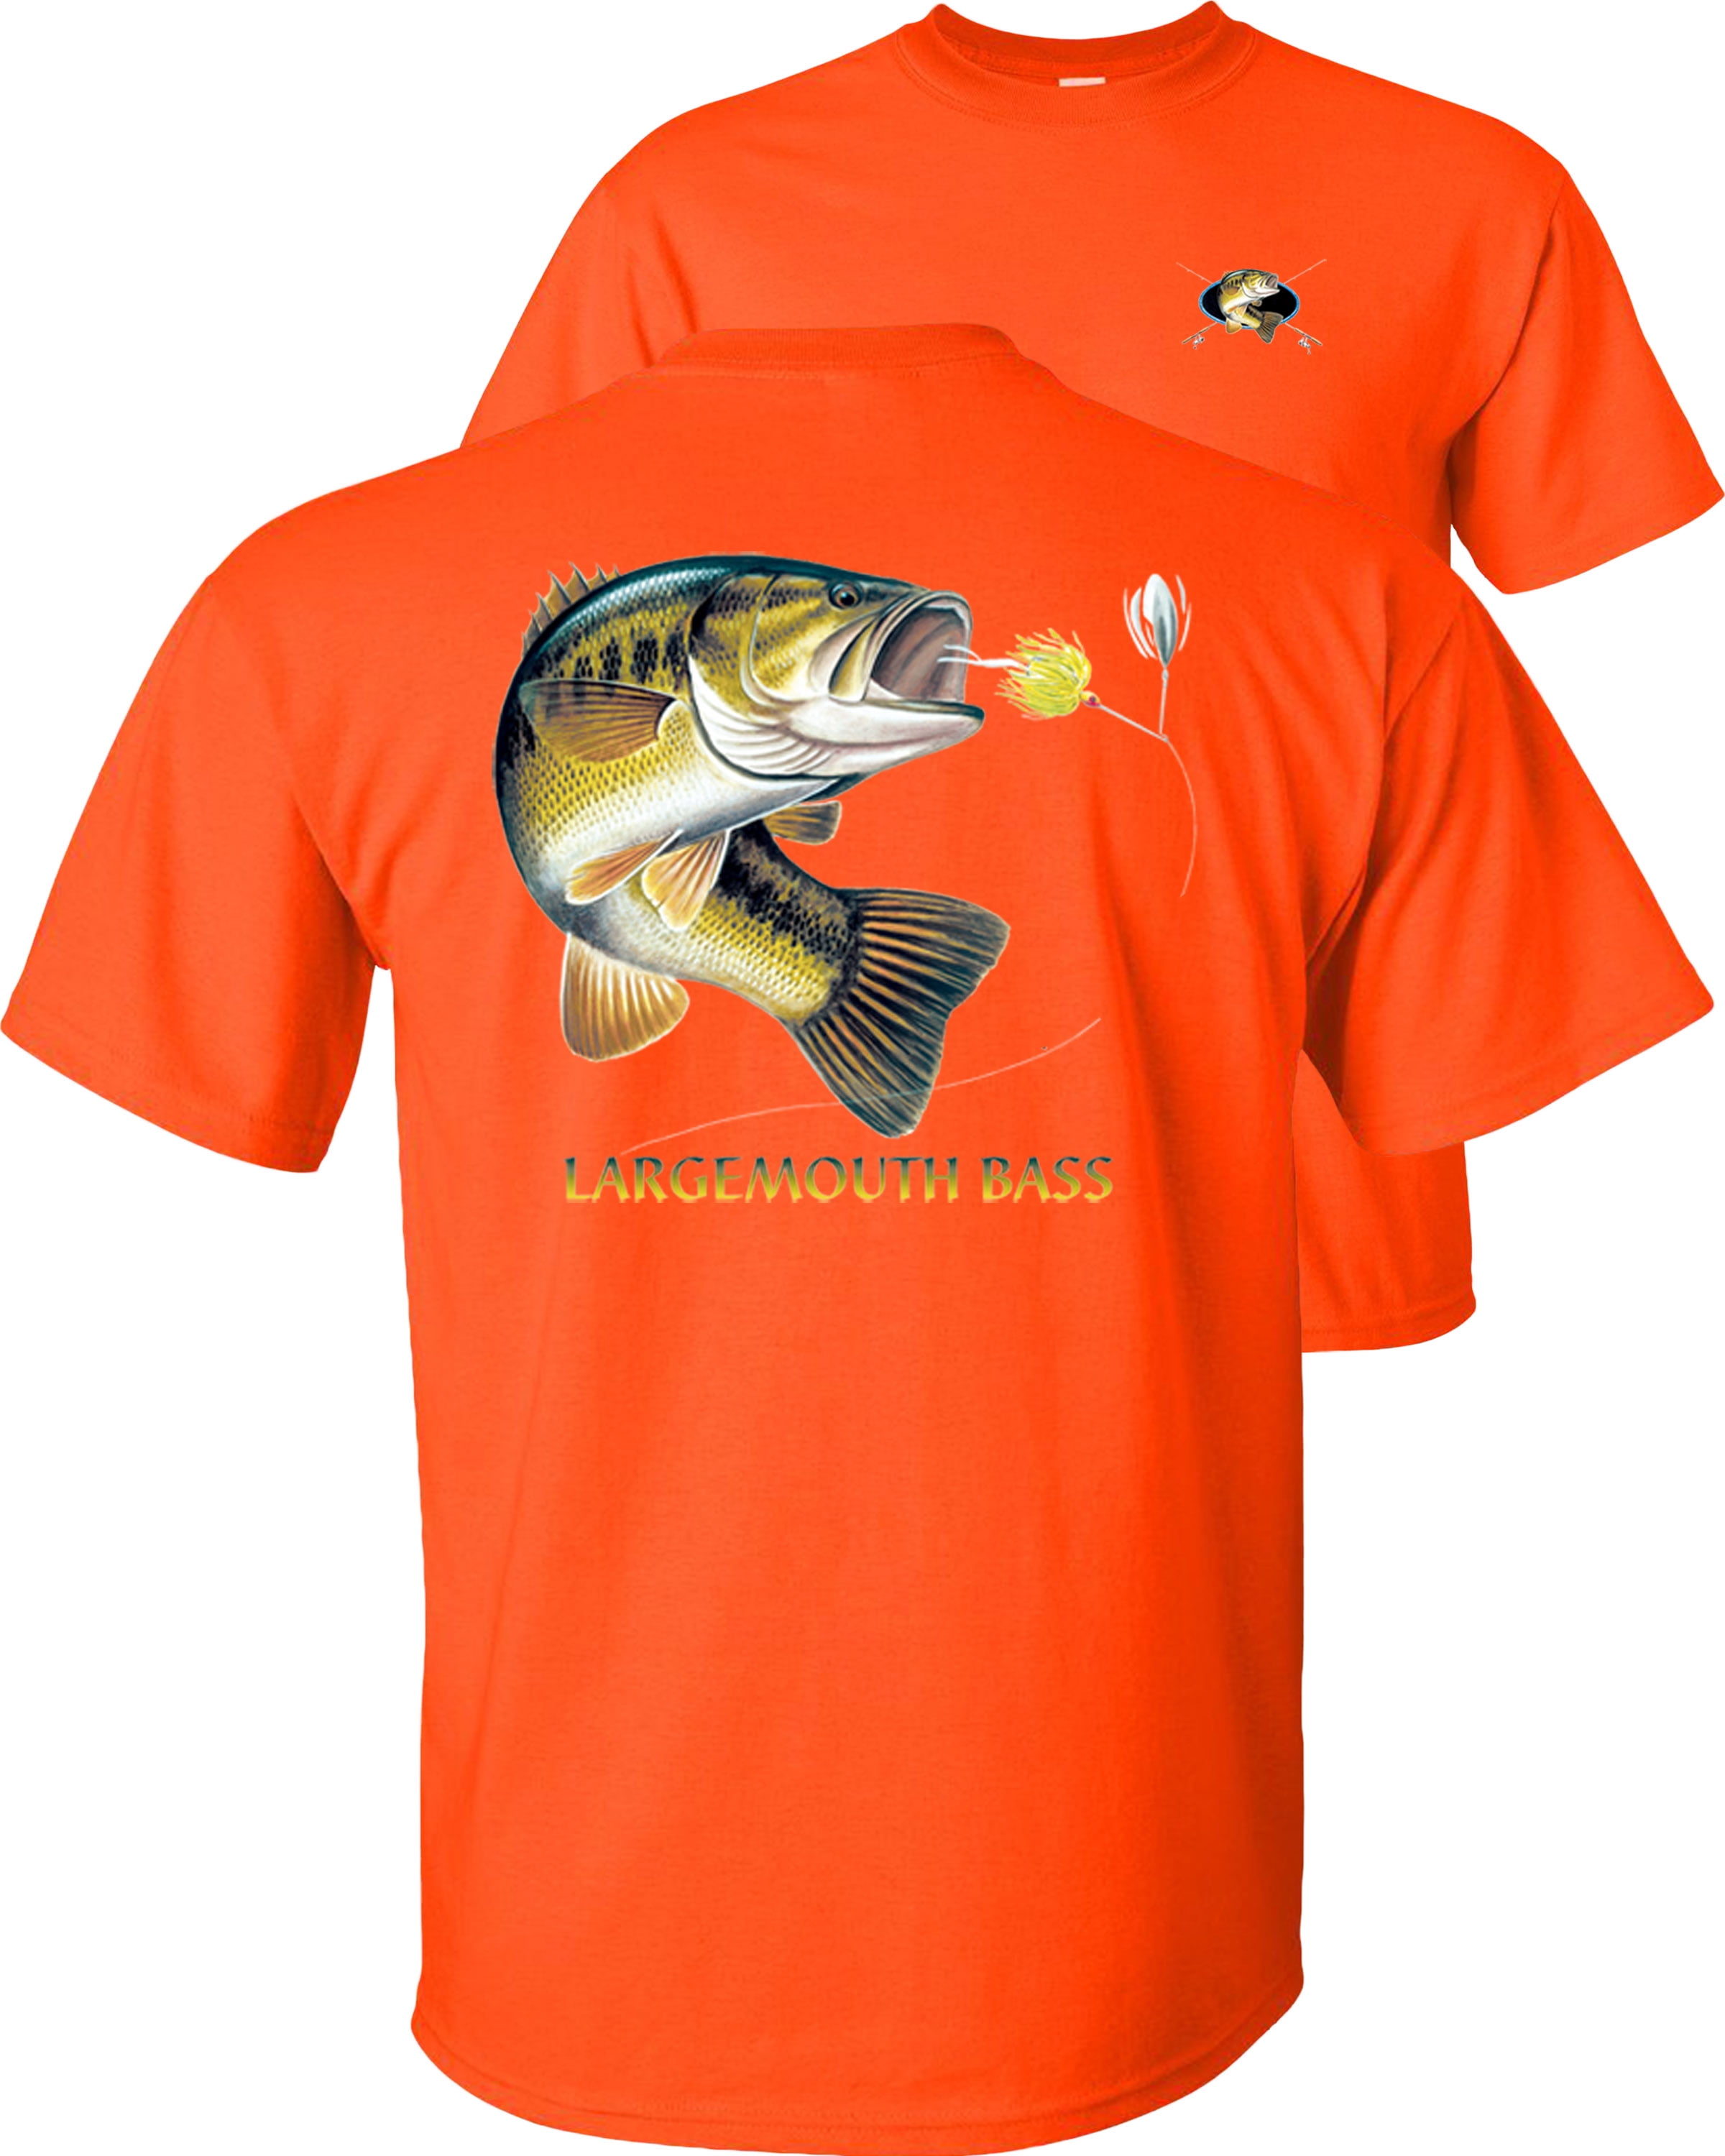 Fair Game Largemouth Bass T-Shirt, combination profile, Fishing Graphic Tee-Orange-2x  